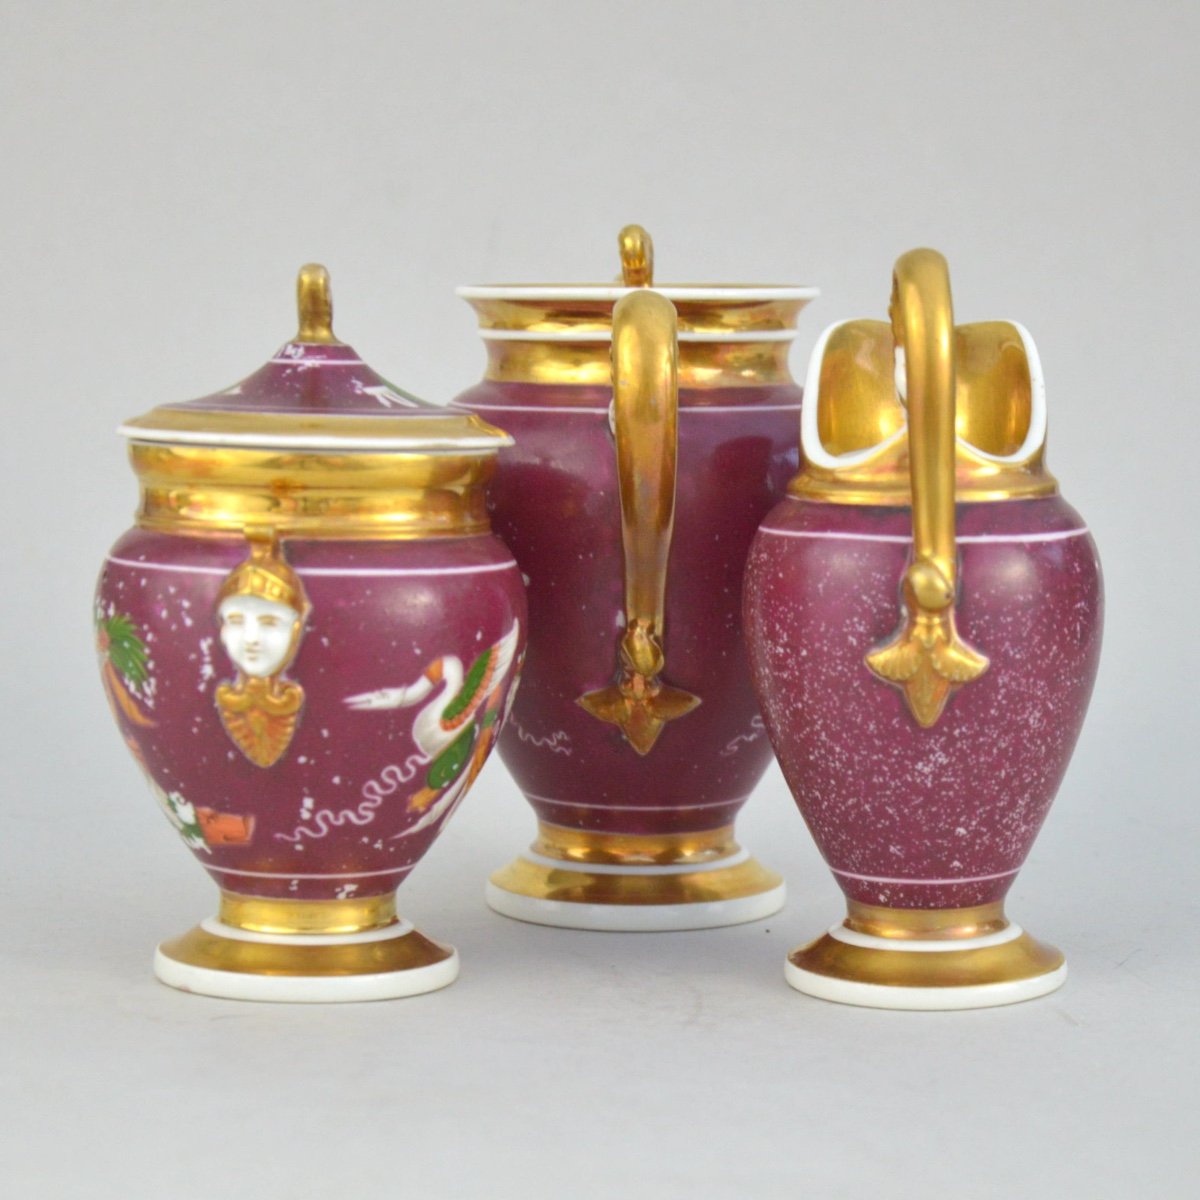 Miniature Paris Empire Porcelain Service With Polychrome Decor On A Purple Background 19th Century-photo-2